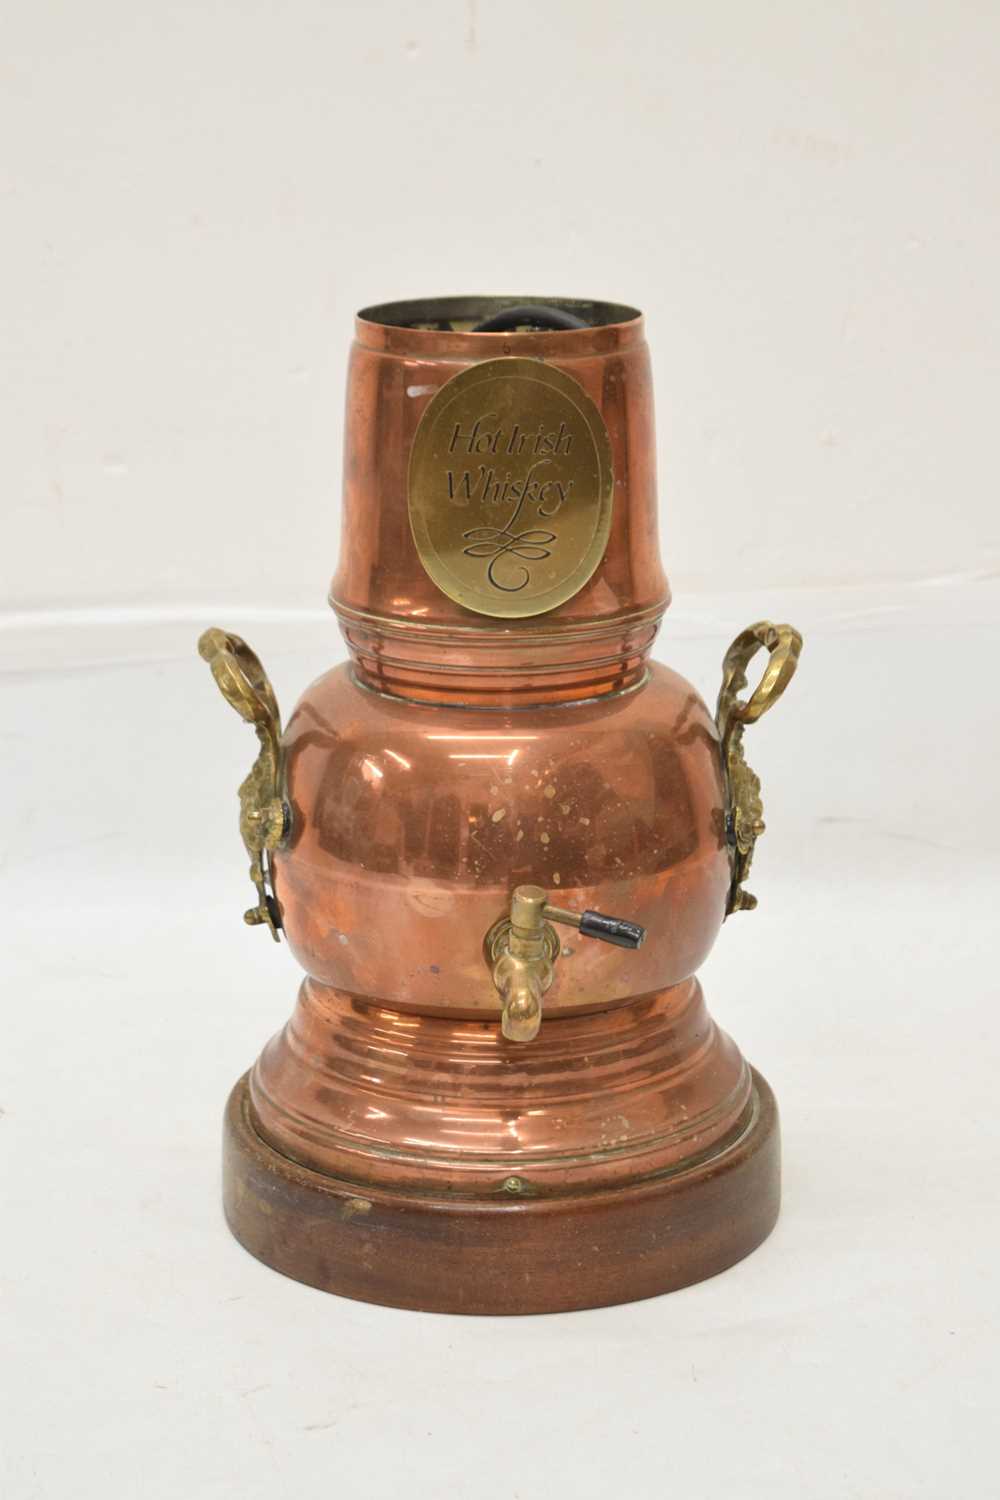 20th century copper 'Hot Irish Whiskey' warming kettle or samovar - Image 3 of 9